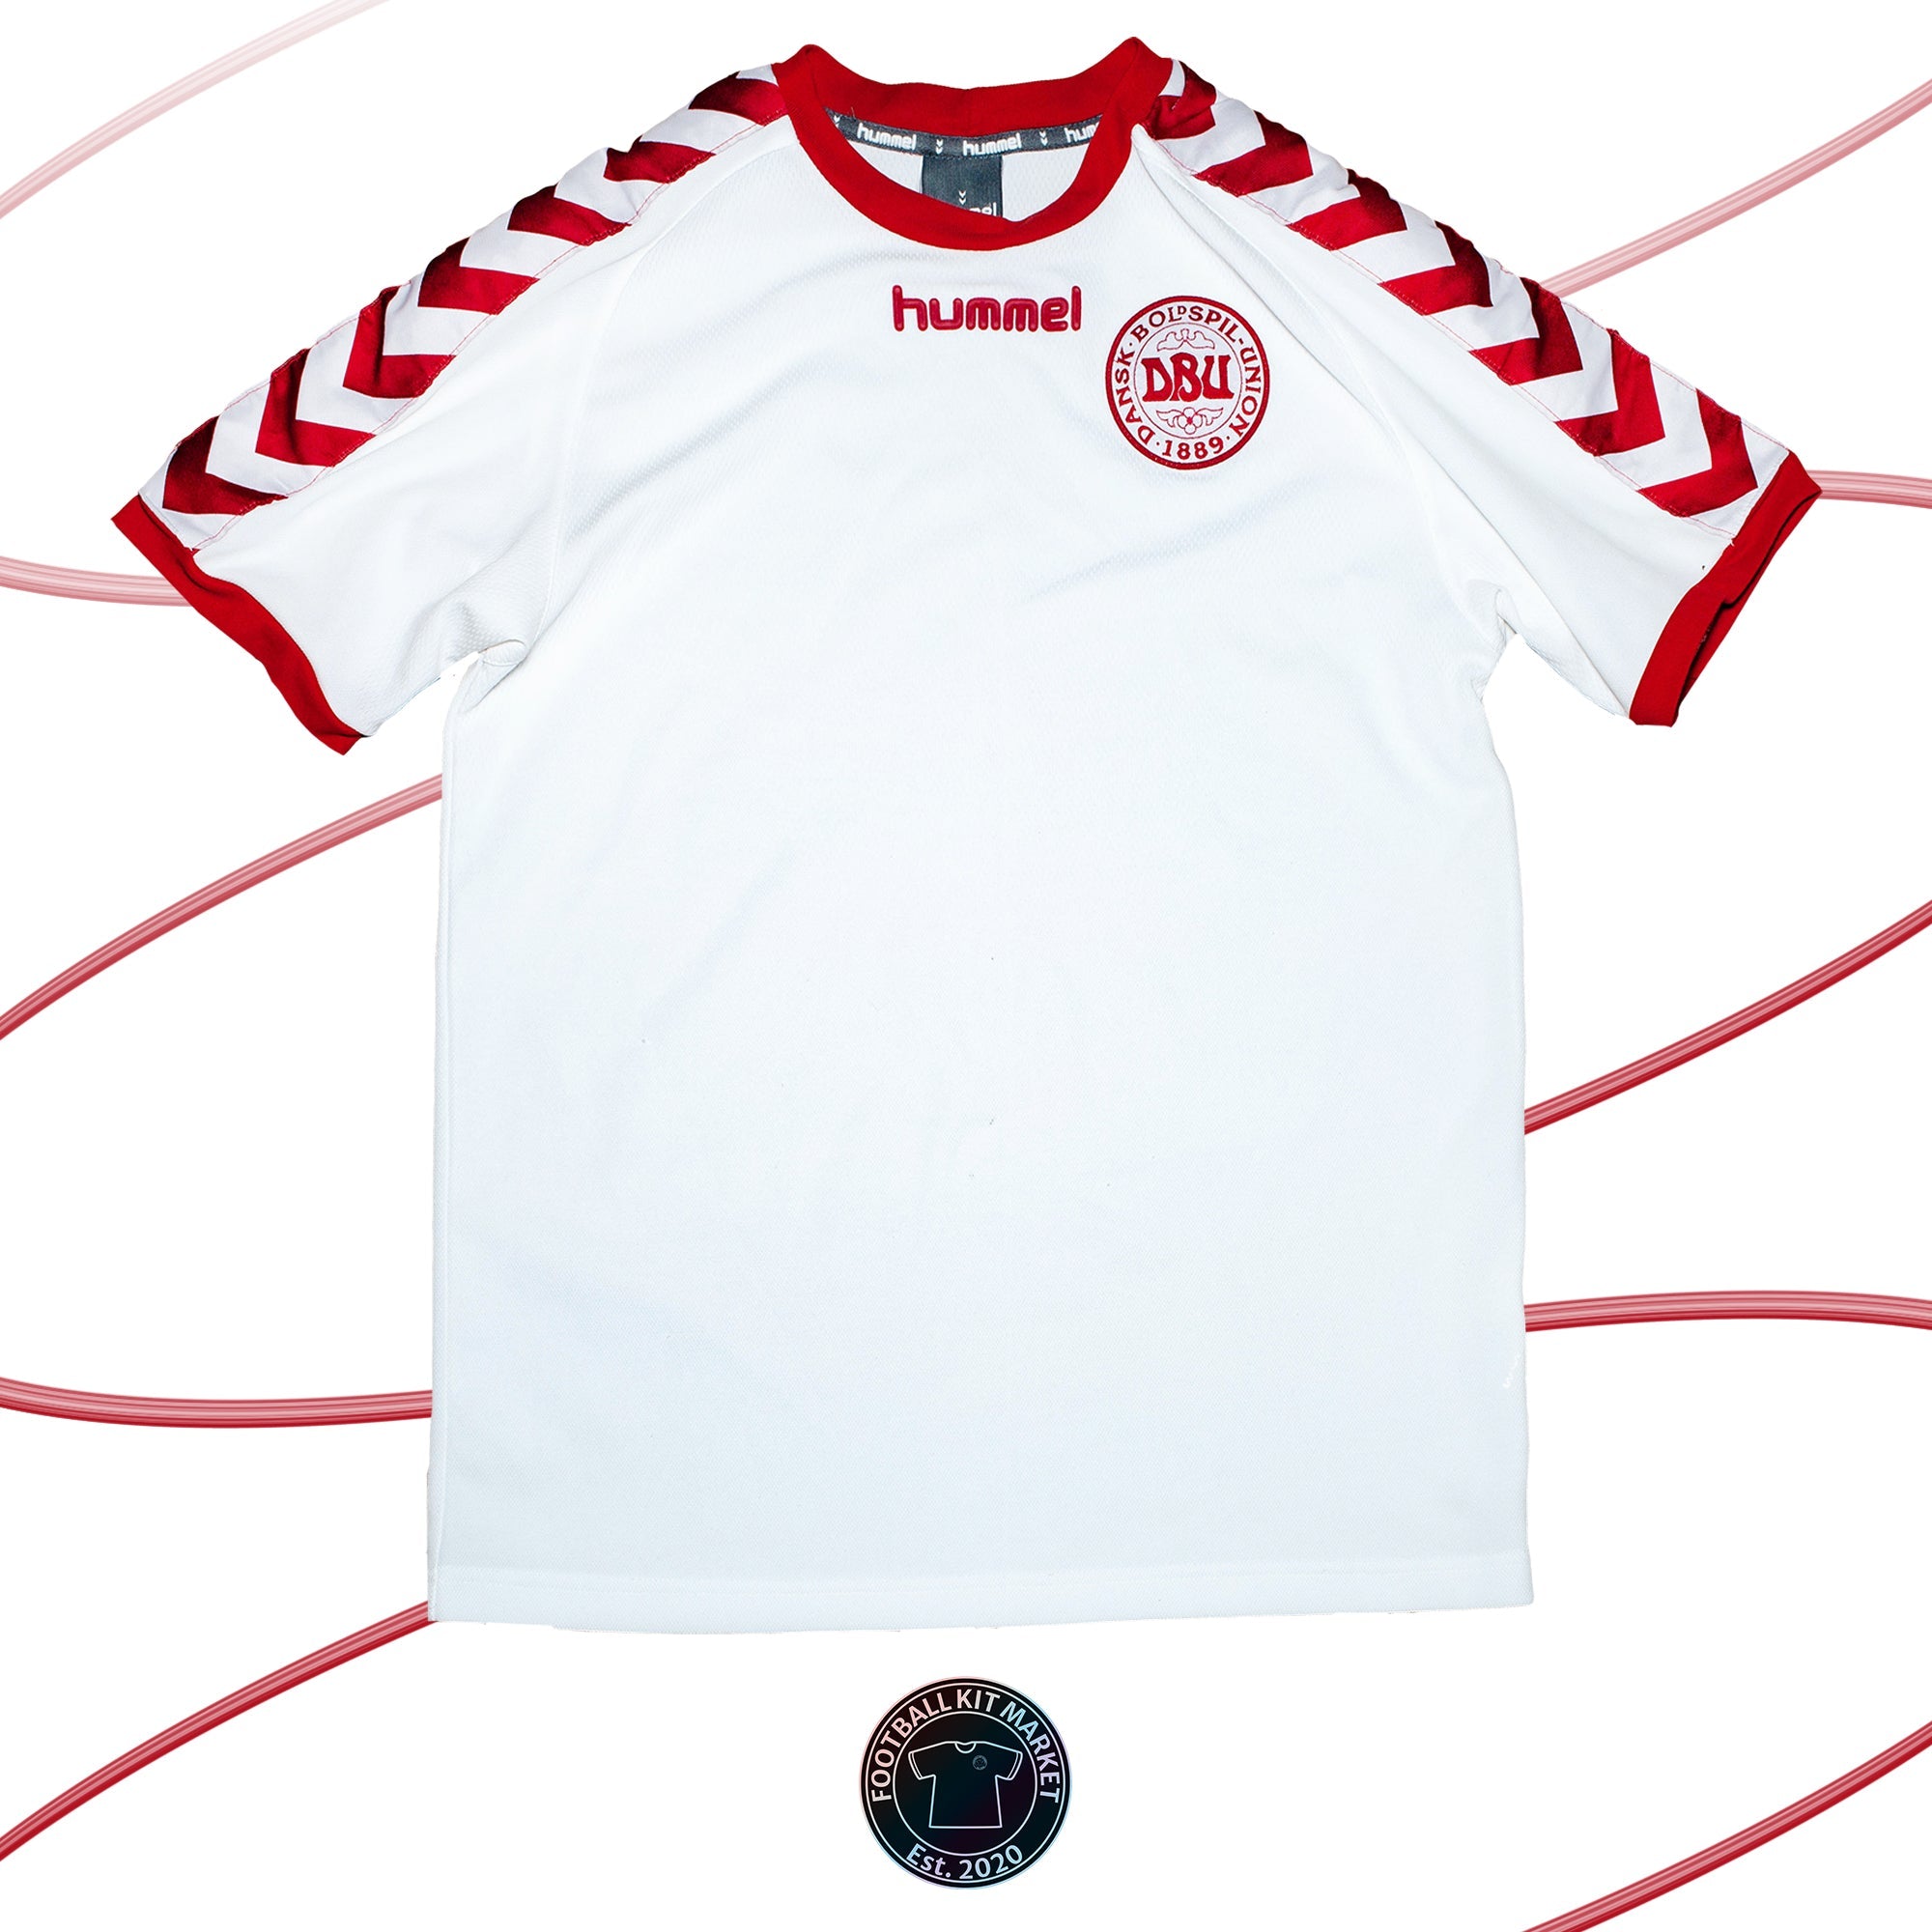 Genuine DENMARK Away Shirt (2002-2003) - HUMMEL (M) - Product Image from Football Kit Market